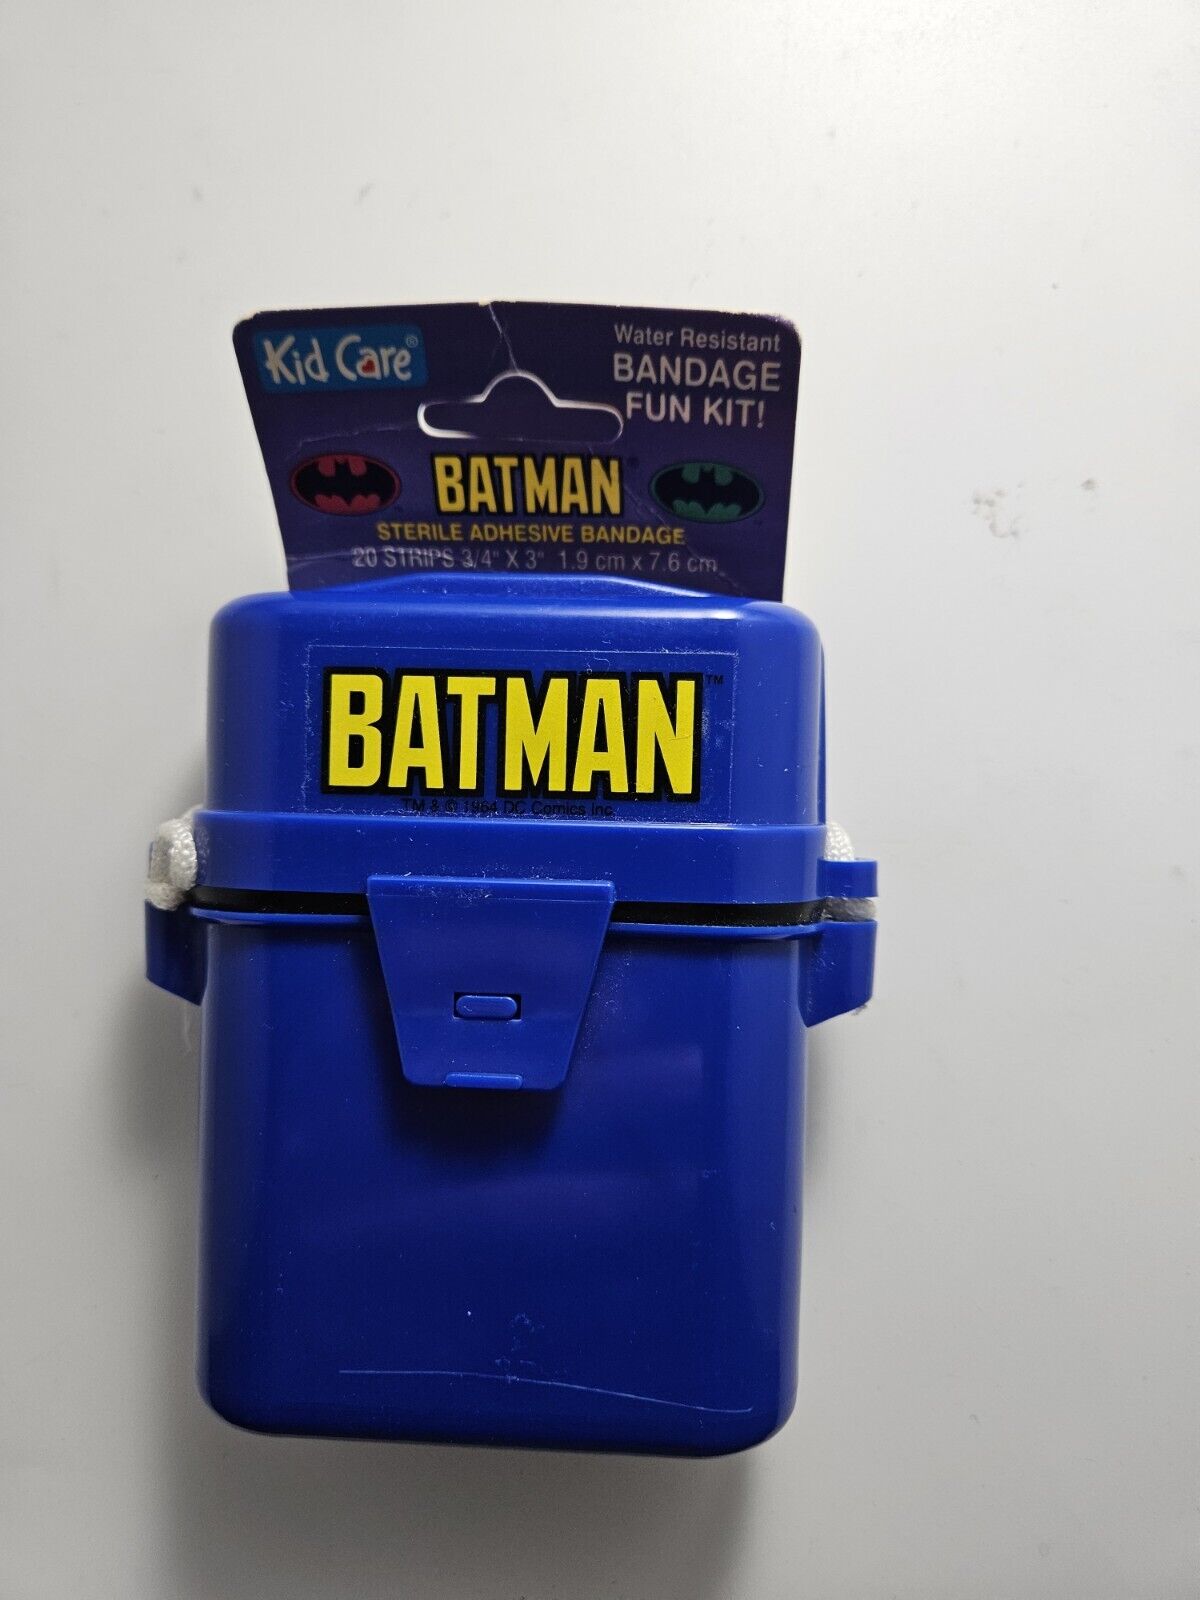 New Vintage Batman Kid Care Bandages Band Aid Adhesive Fun Kit Water Resistant